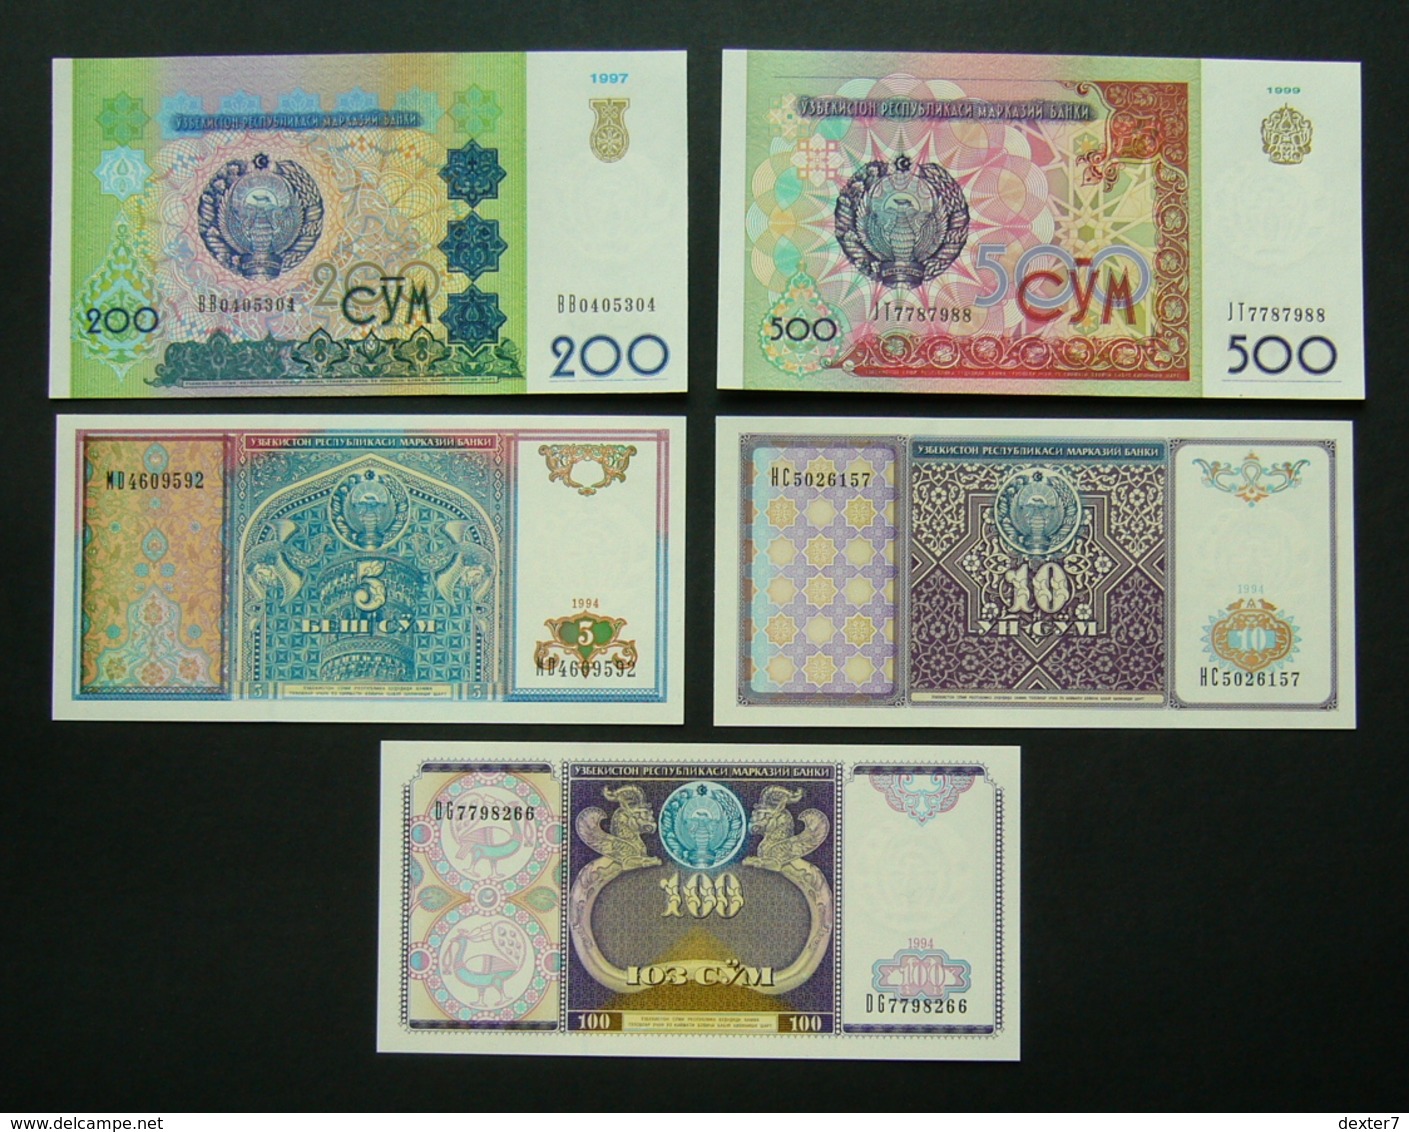 Uzbekistan 5, 10, 100, 200 E 500 Sum 1994 1997 1999 UNC FdS 5x Pcs Set - Uzbekistan